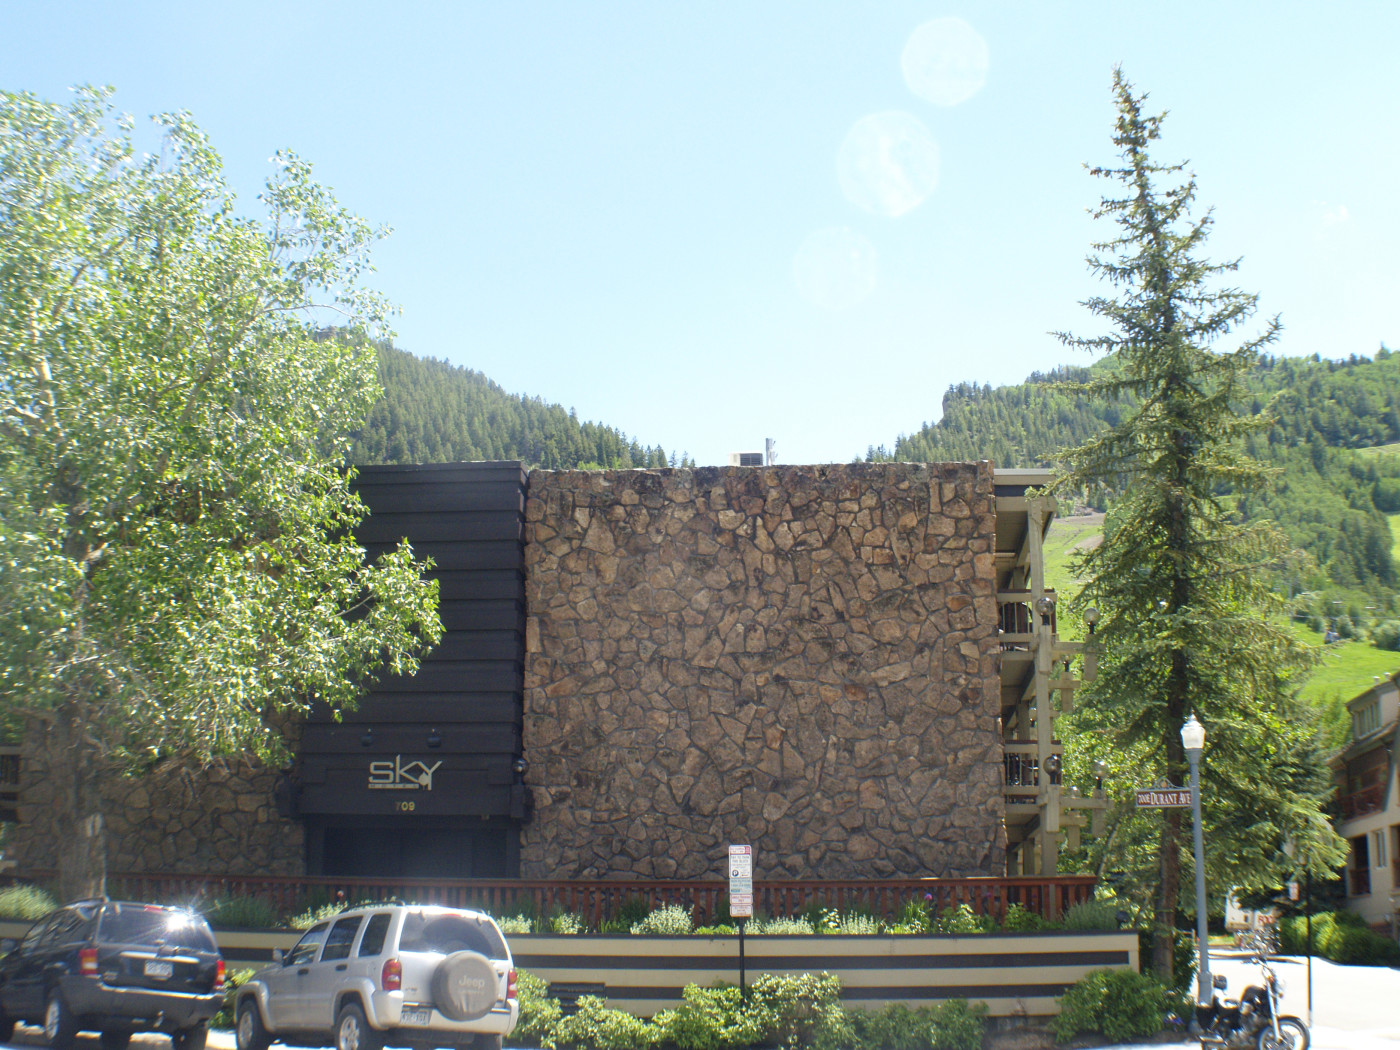 sky hotel building base of ajax mountain